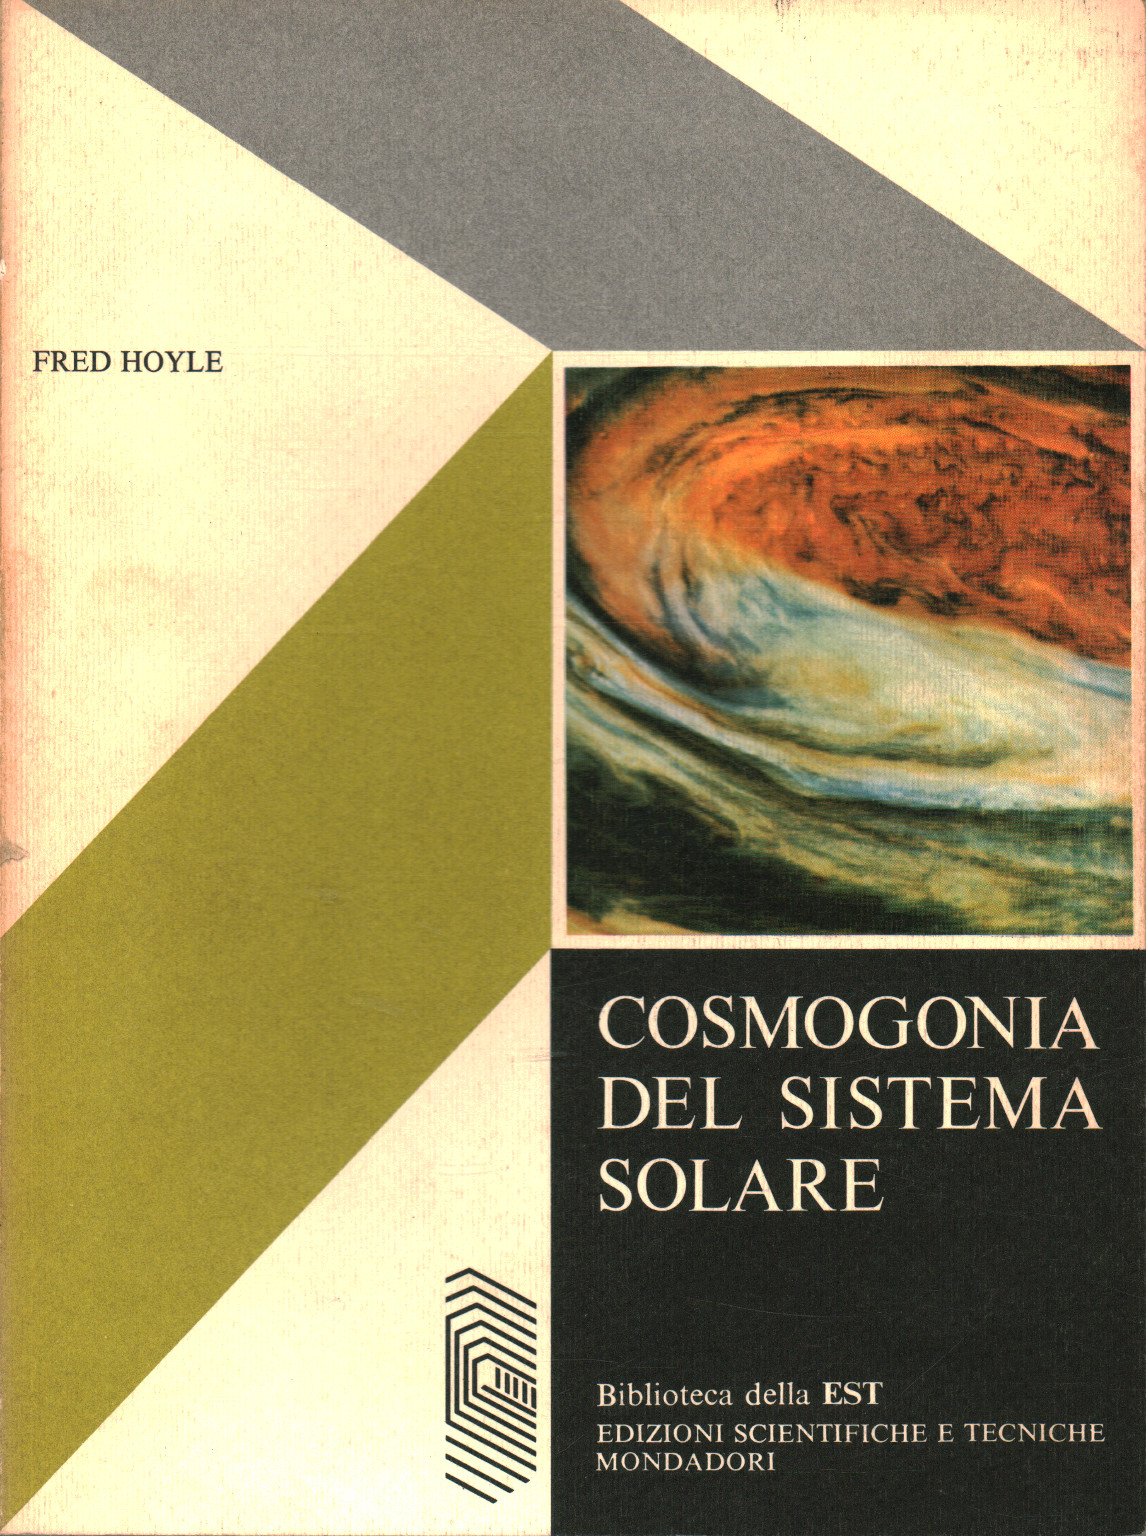 Kosmogonie des sonnensystems, Fred Hoyle